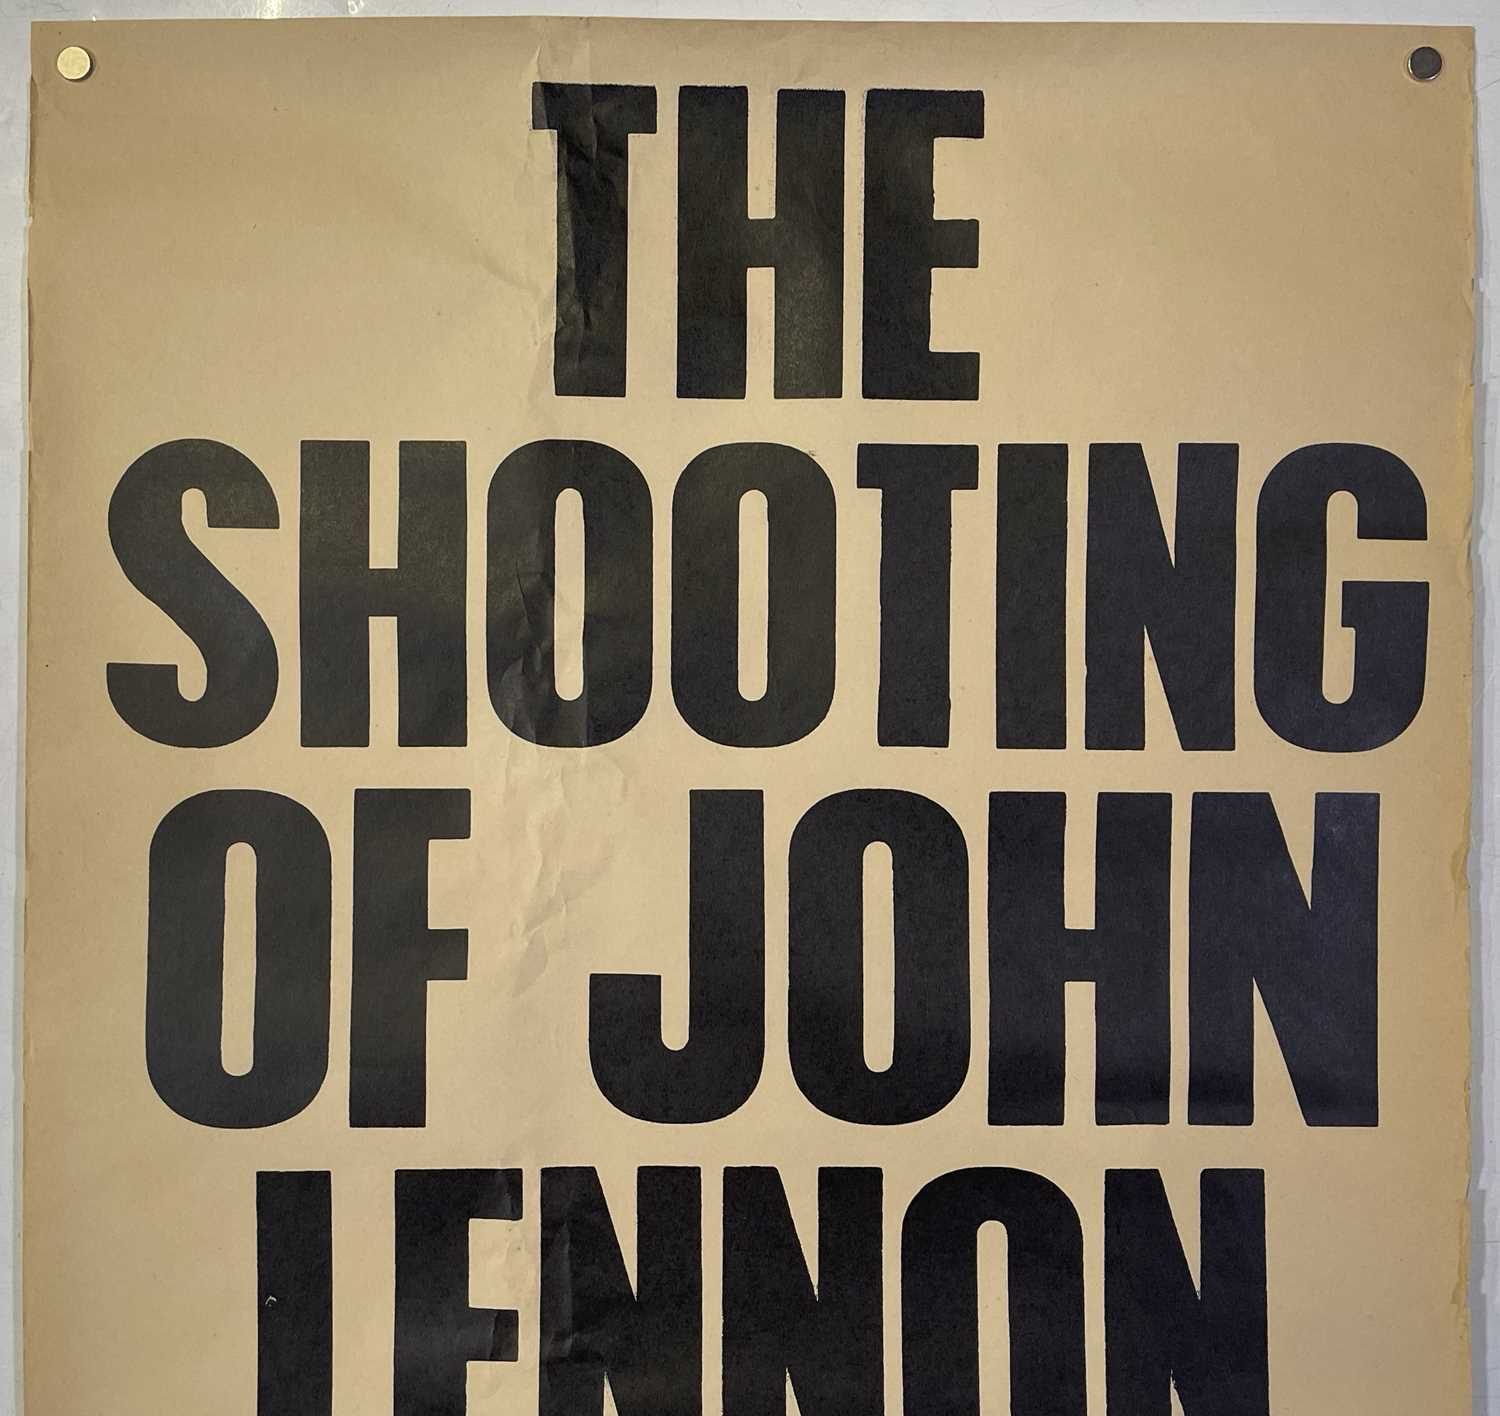 THE BEATLES - JOHN LENNON DEATH NEWSPAPER BILLBOARD. - Image 3 of 3